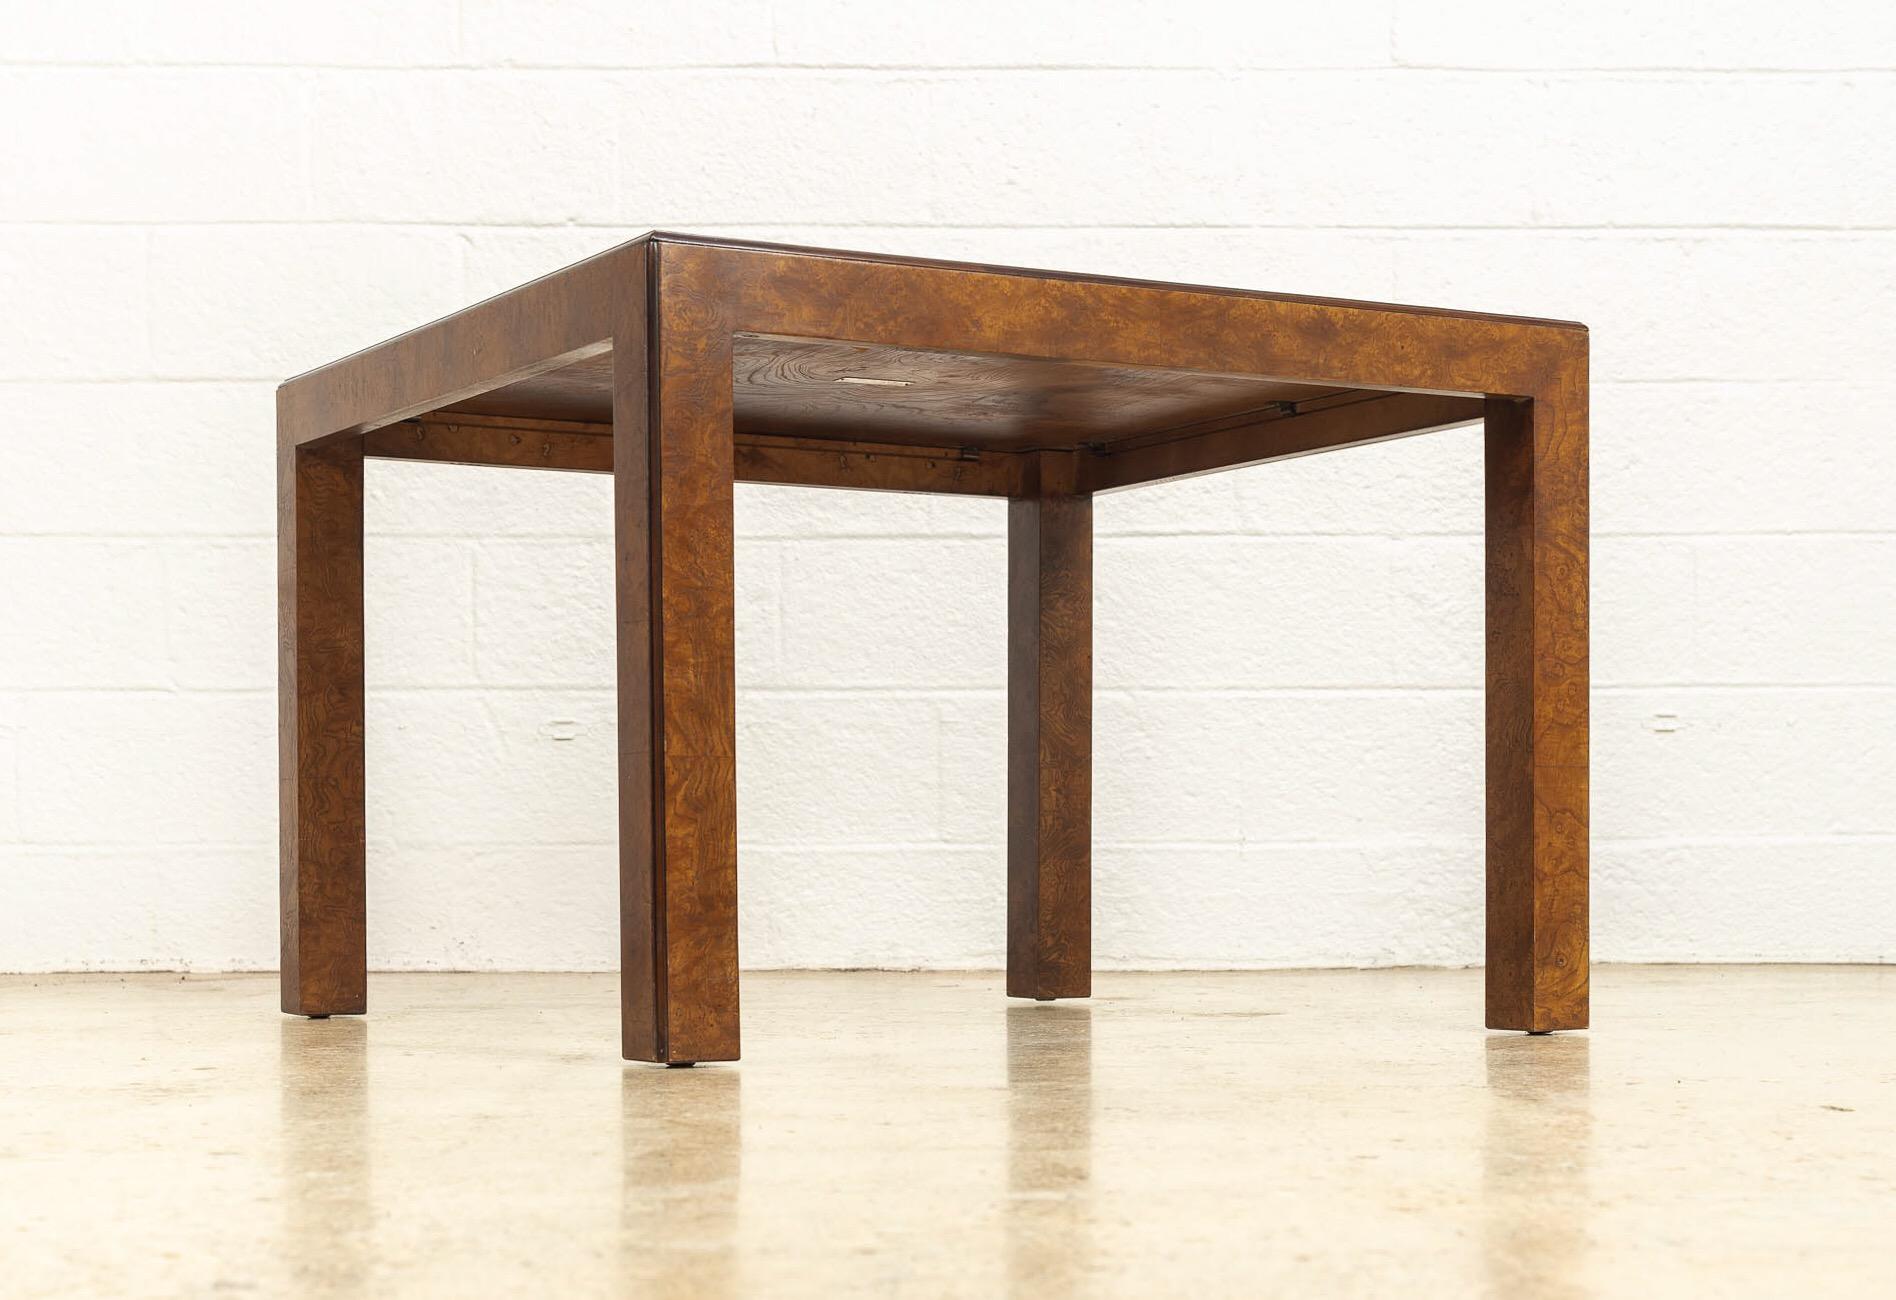 Midcentury John Widdicomb Square Burl Wood Coffee Table Side Table, 1970s For Sale 2